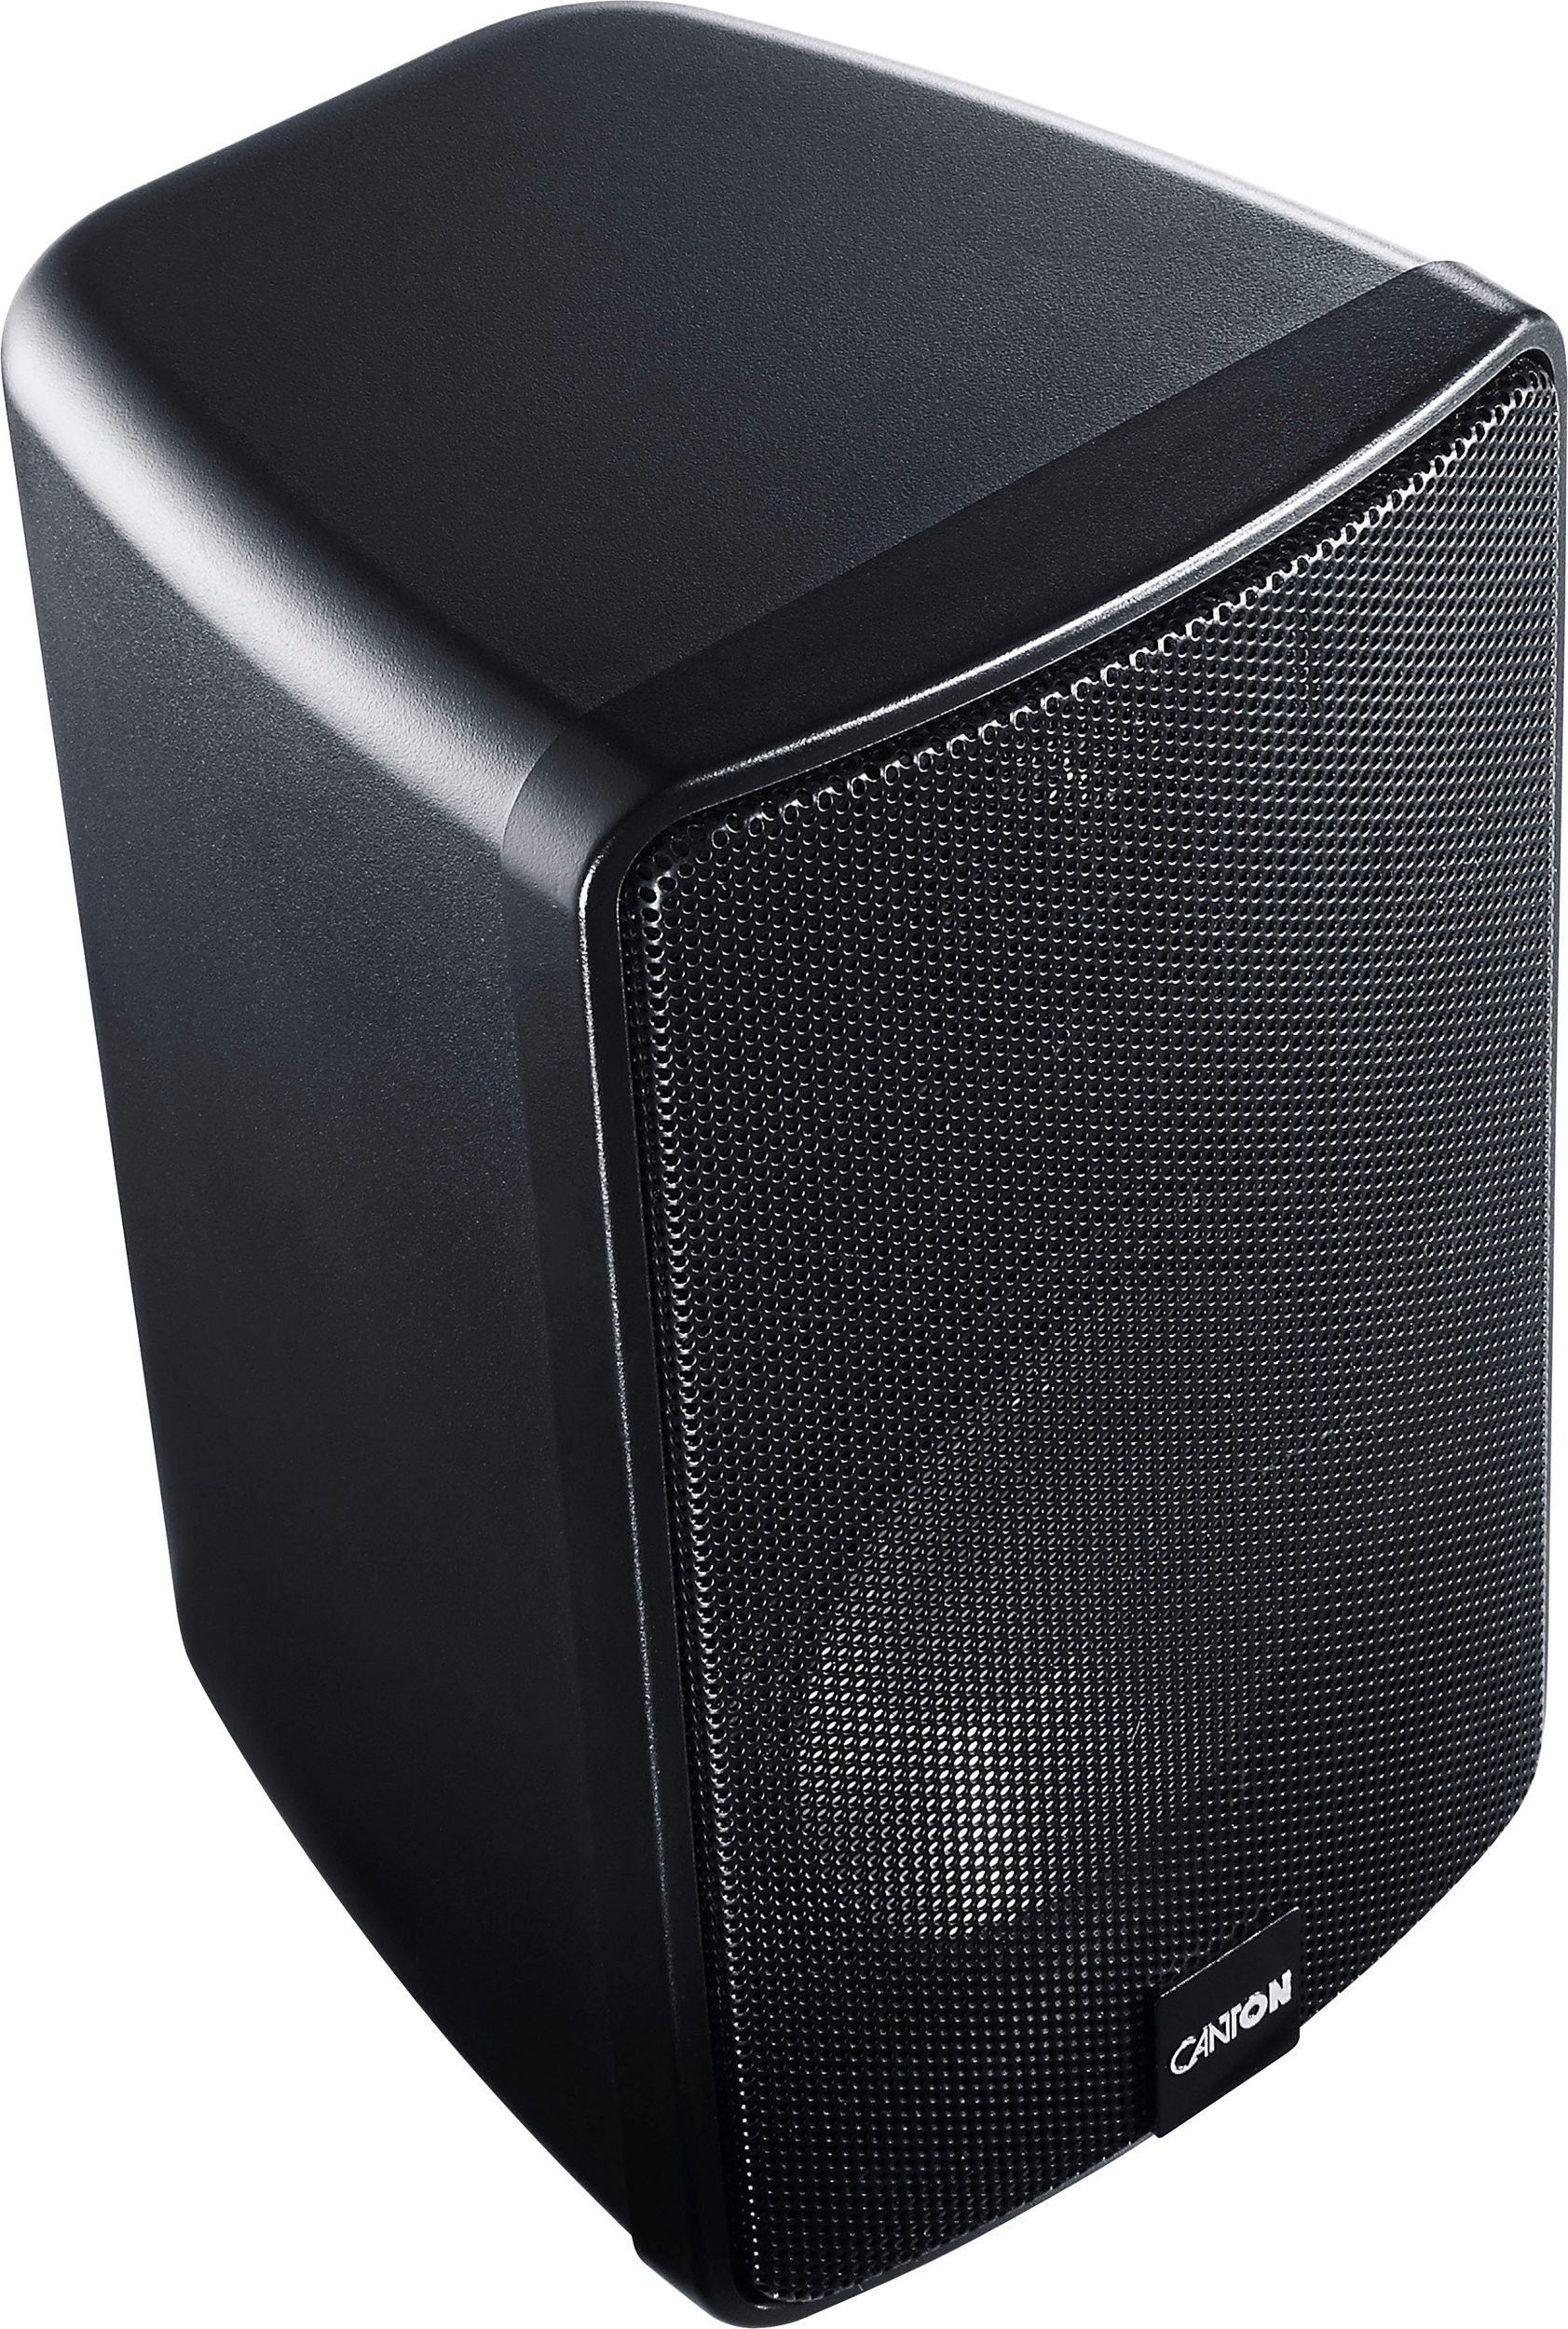 CANTON Plus GX.3 Regallautsprecher 100 Watt Paar schwarz Lautsprecher